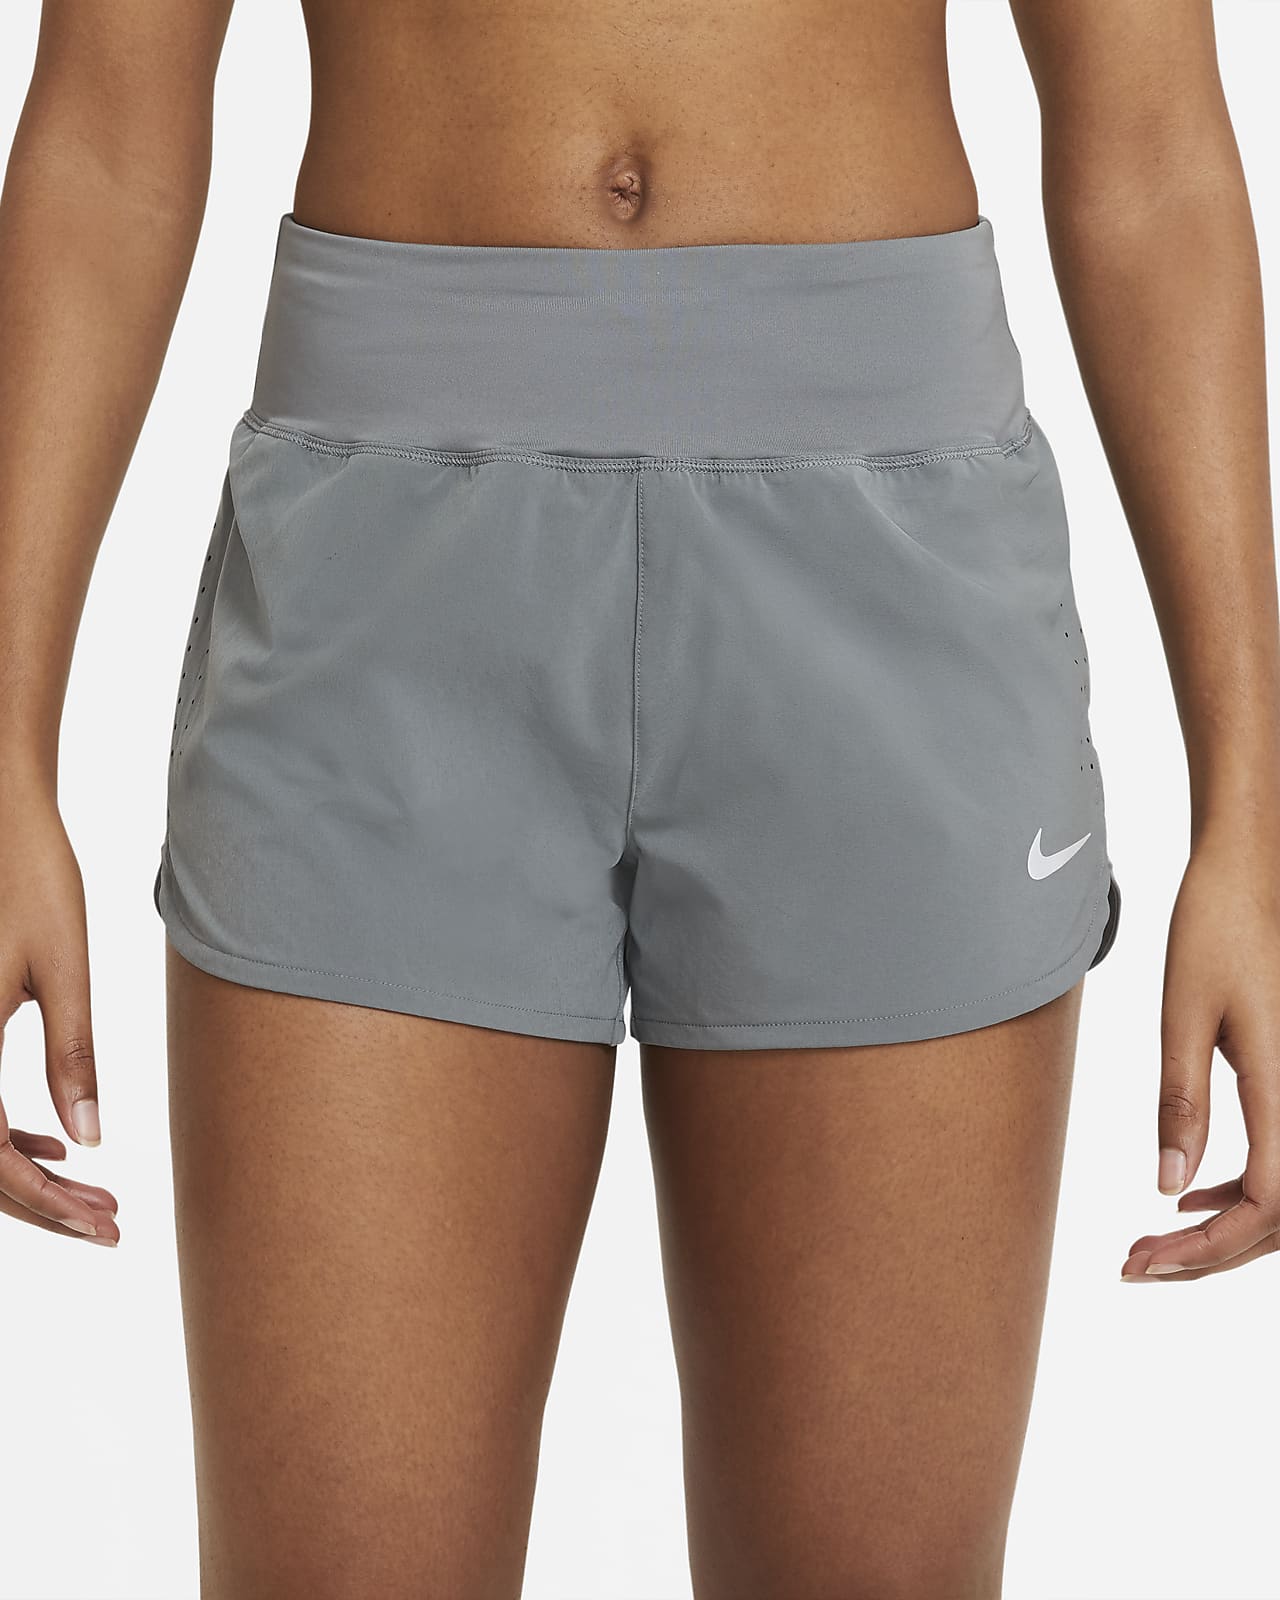 lago luego por qué Shorts de running para mujer Nike Eclipse. Nike.com